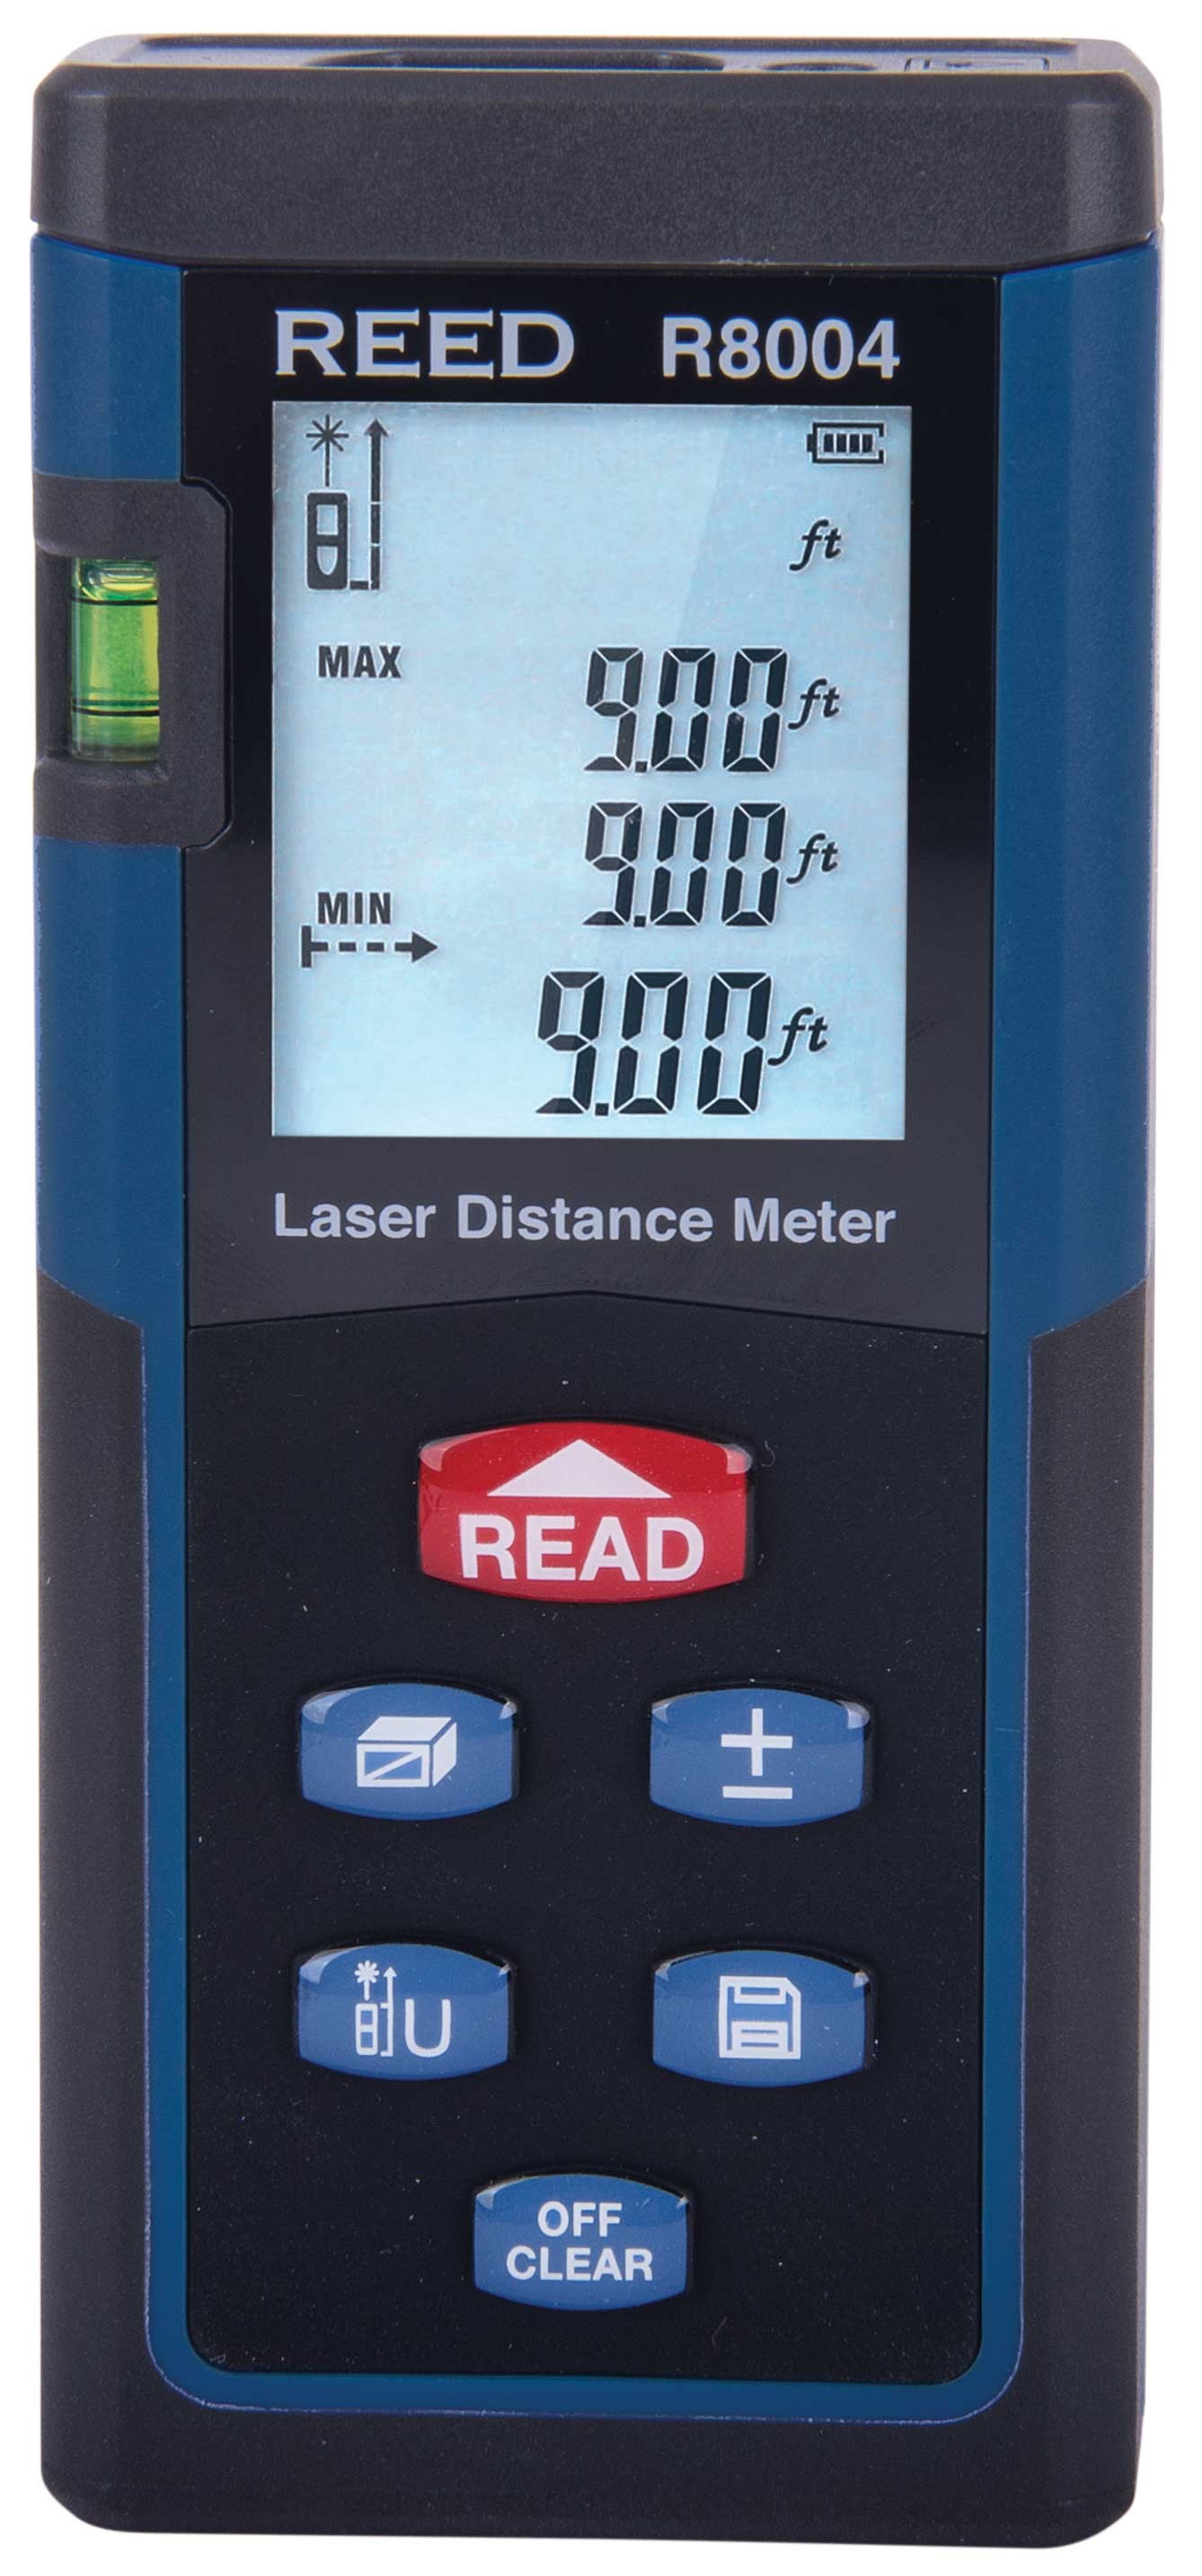 Reed R8004 Laser Distance Meter